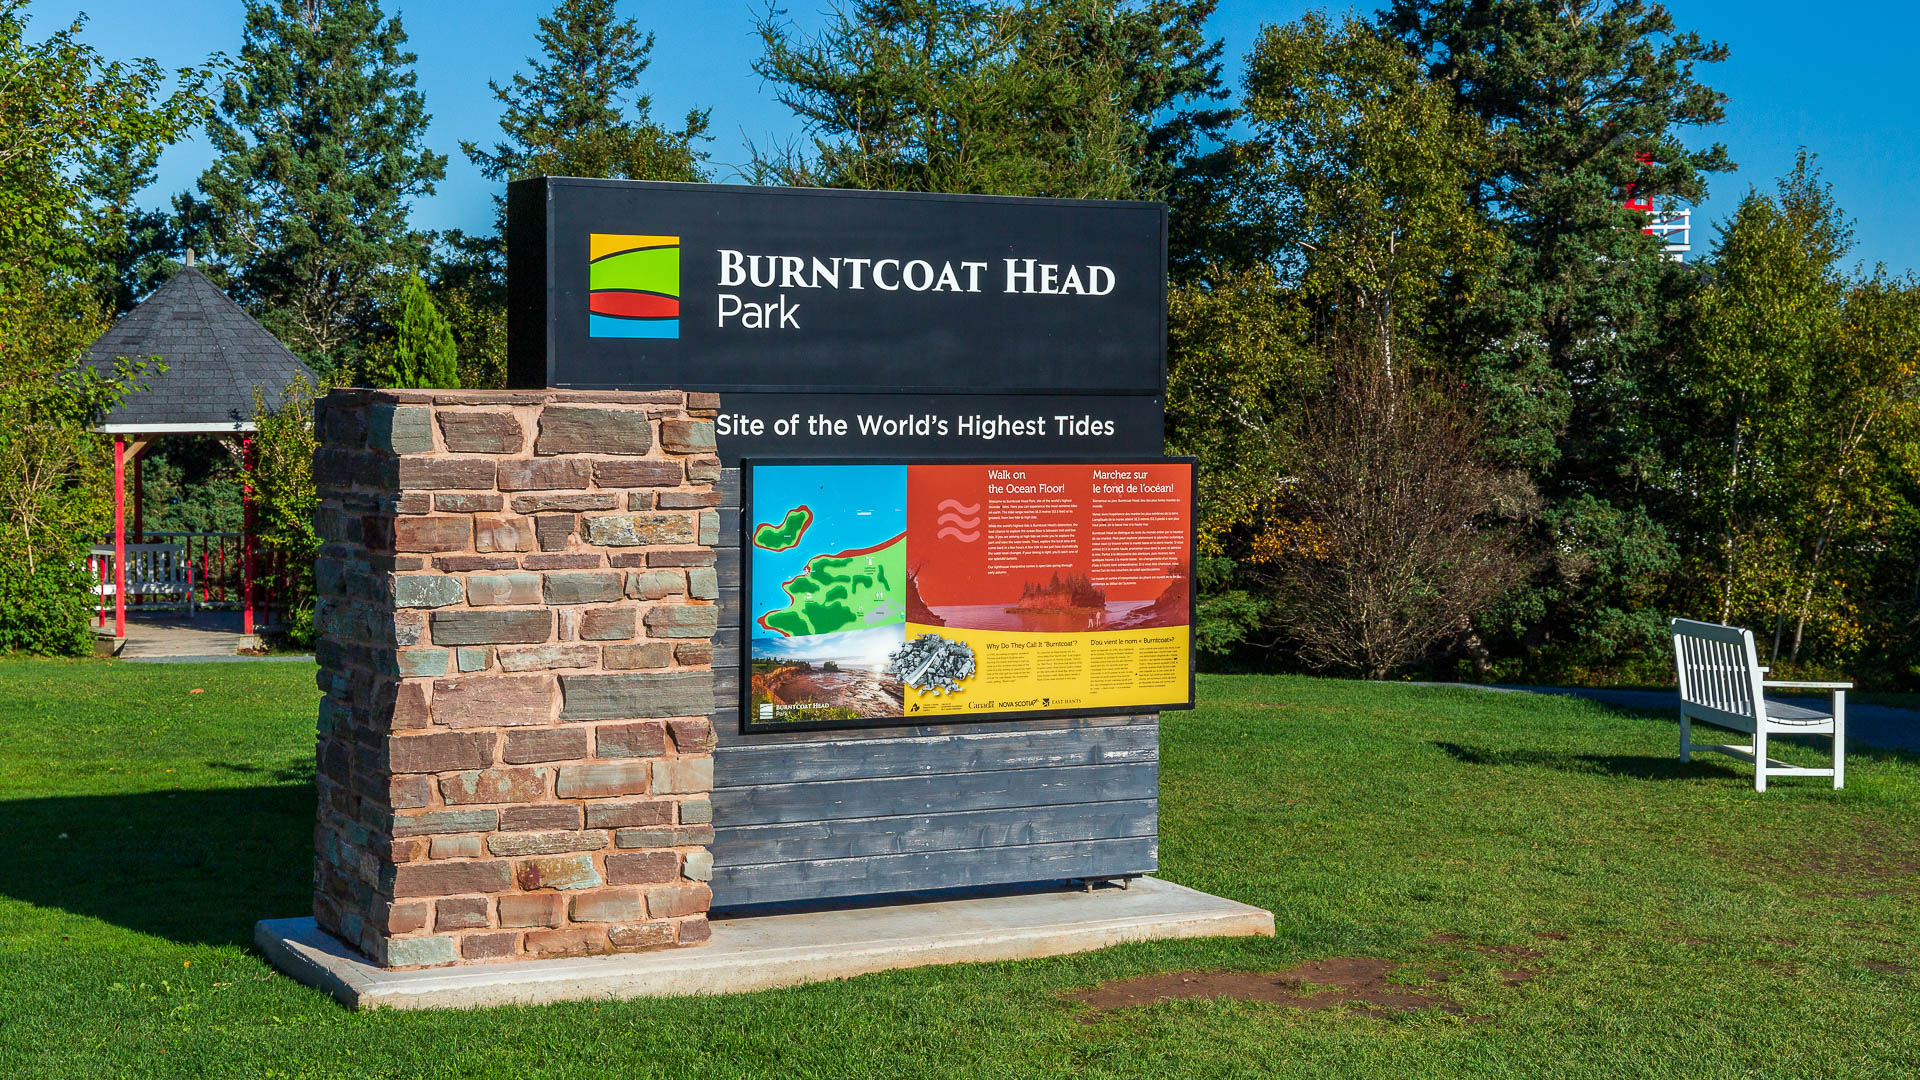 Burntcoat Head Park – wandern auf dem Meeresgrund